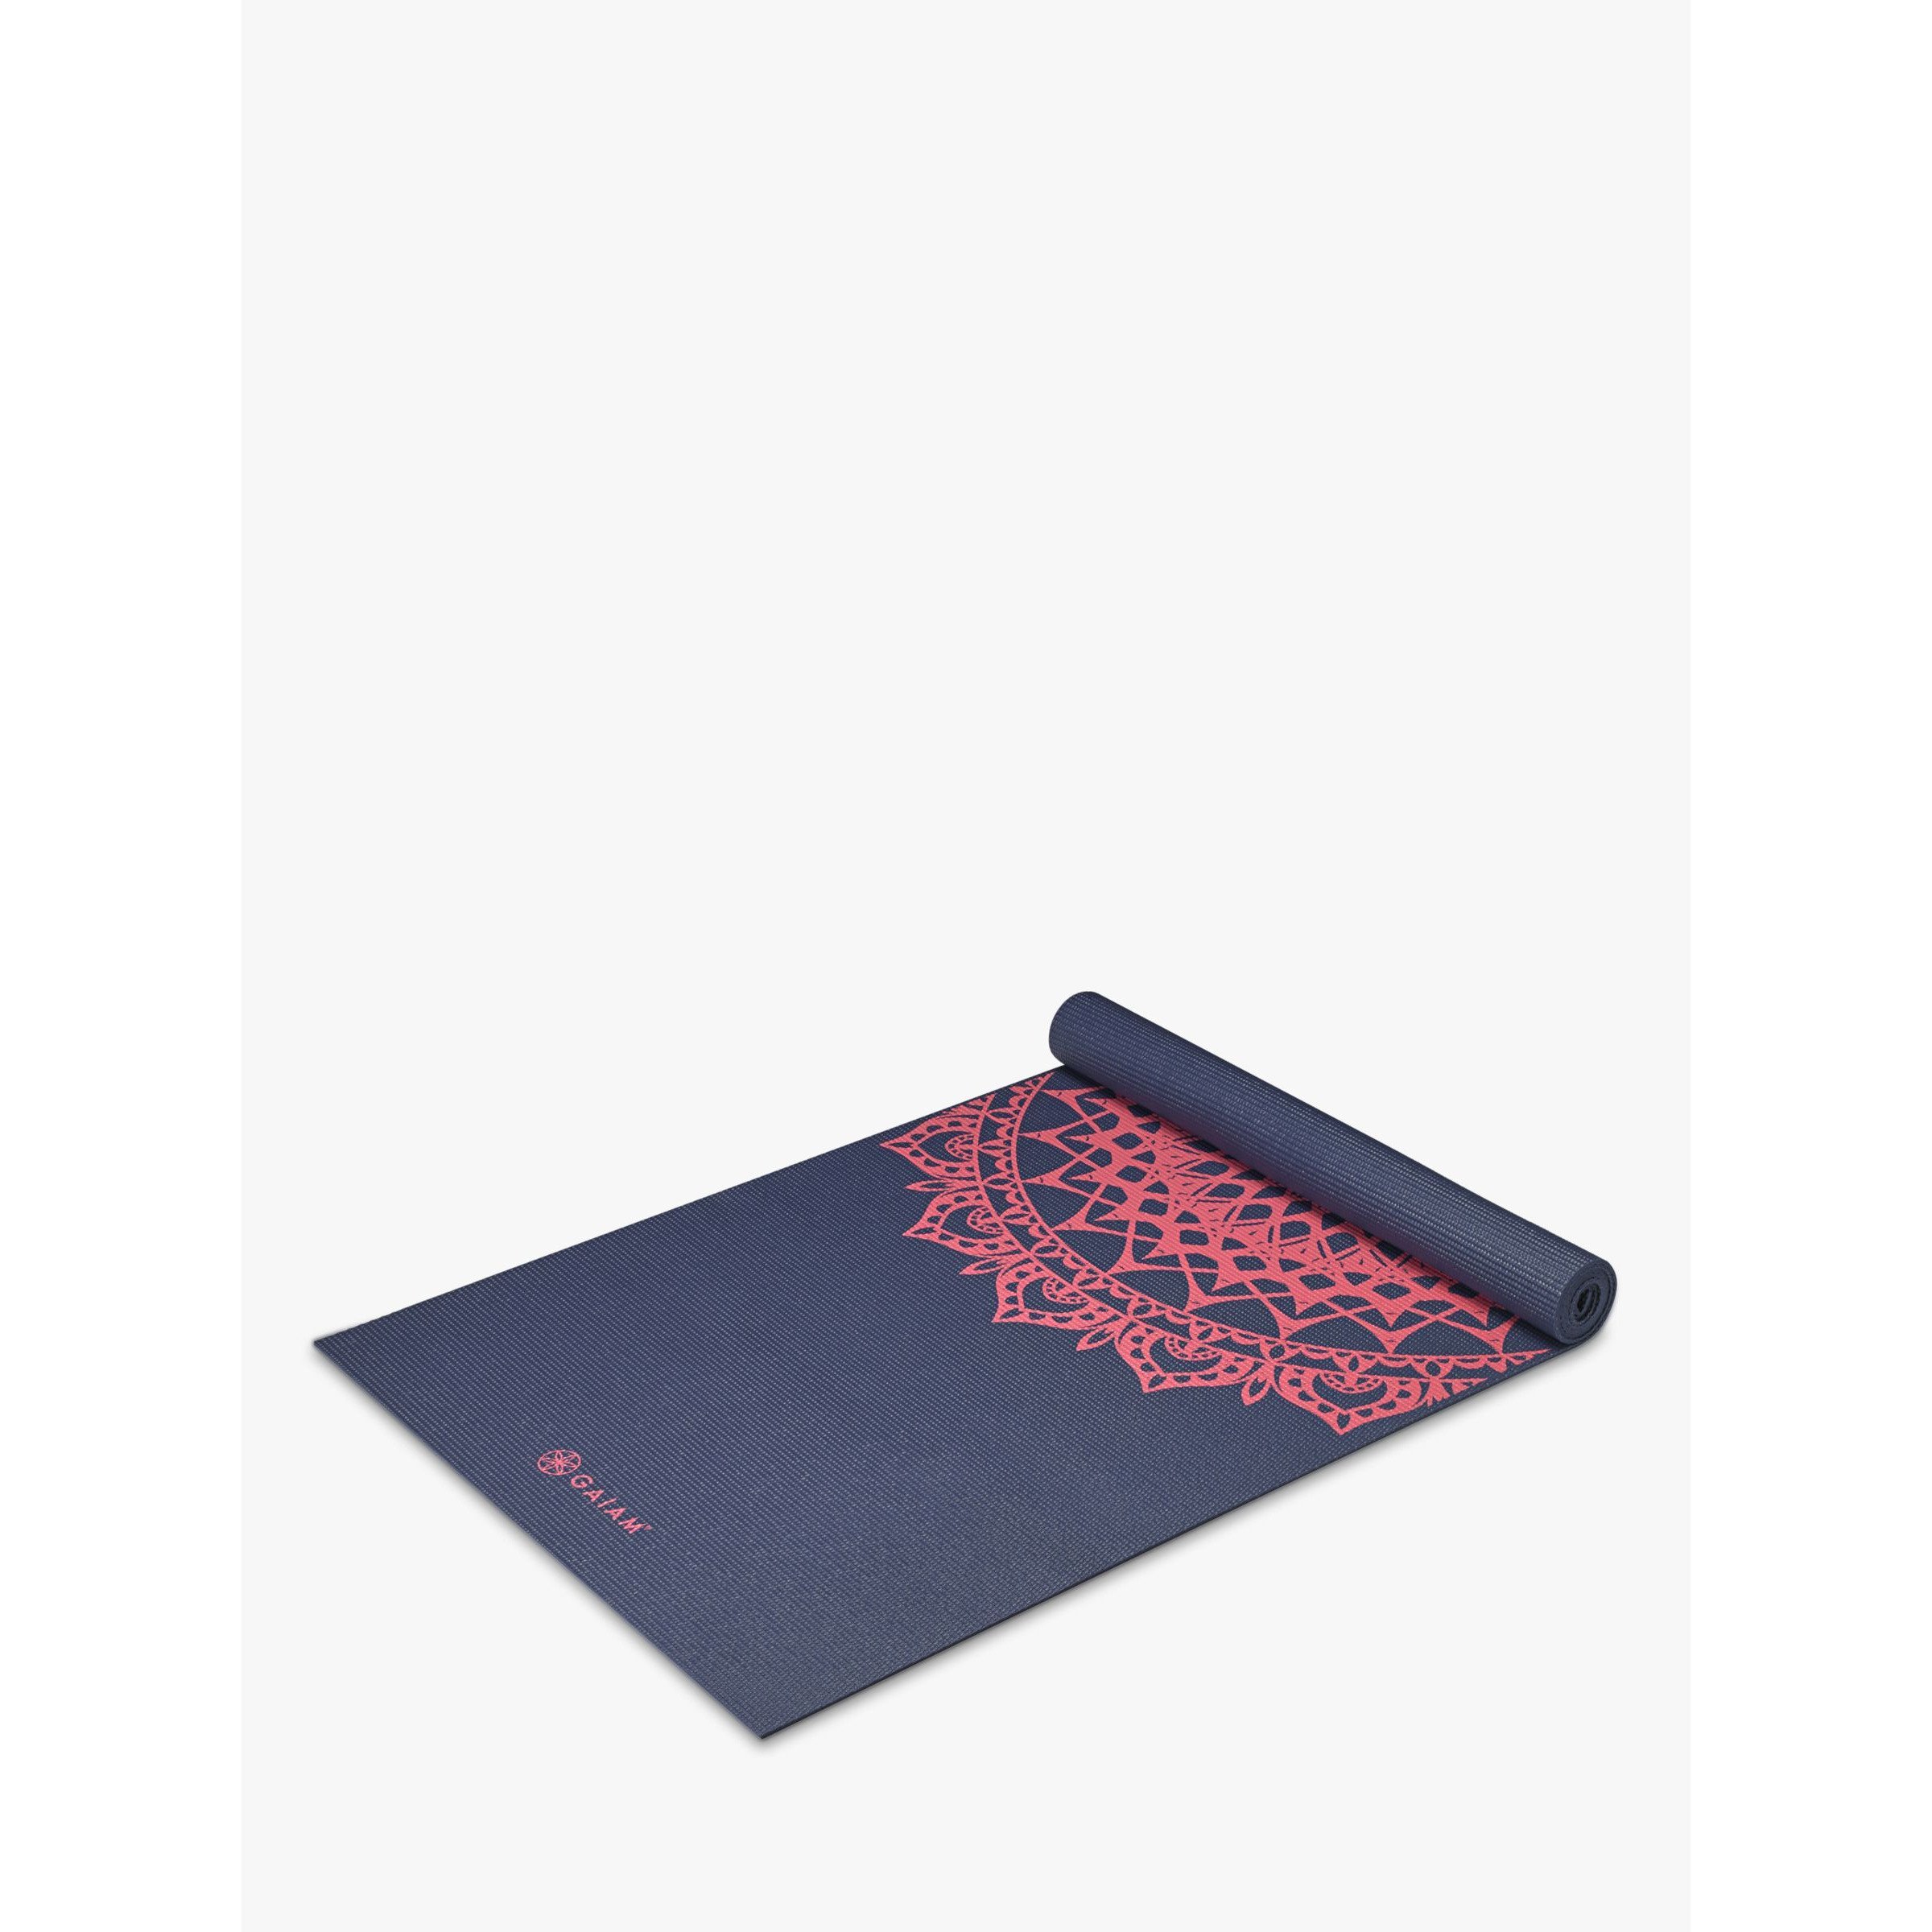 Gaiam Premium Marrakesh 4mm Yoga Mat, Navy Fleur by John Lewis